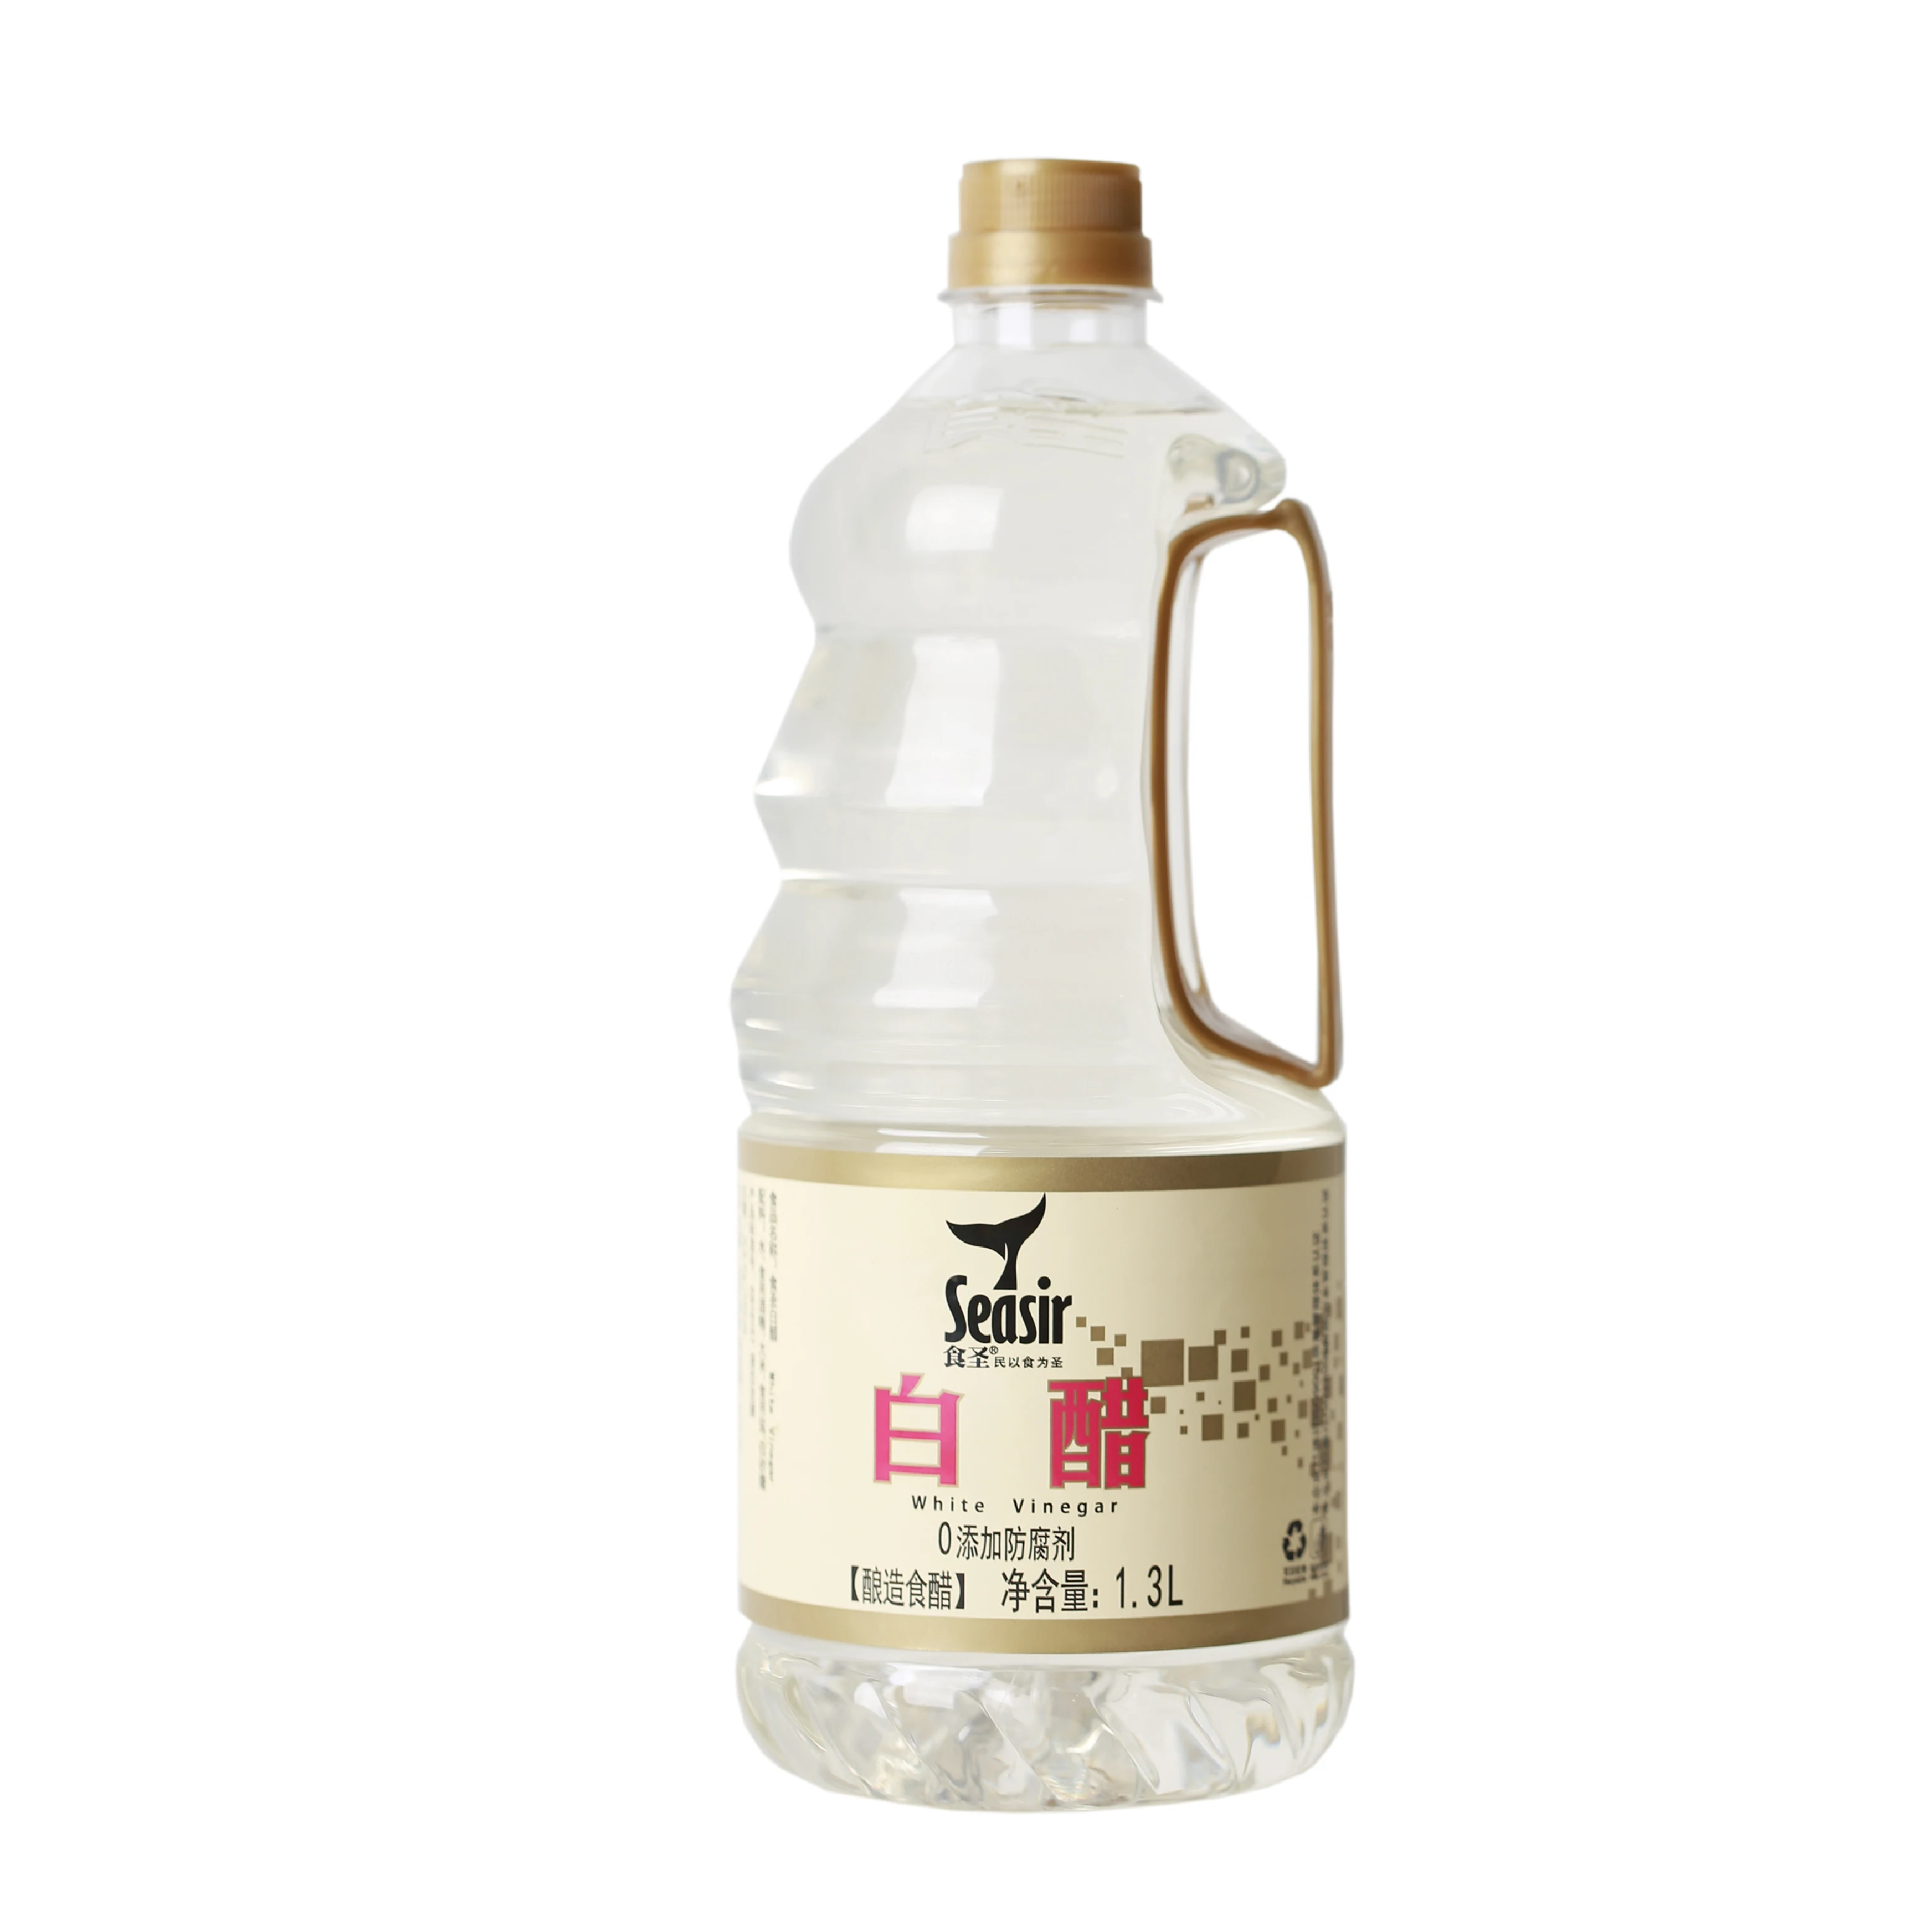 HALAL 500ml brewed sushi vinegar balsamic rice vinegar wholesale manufacturer